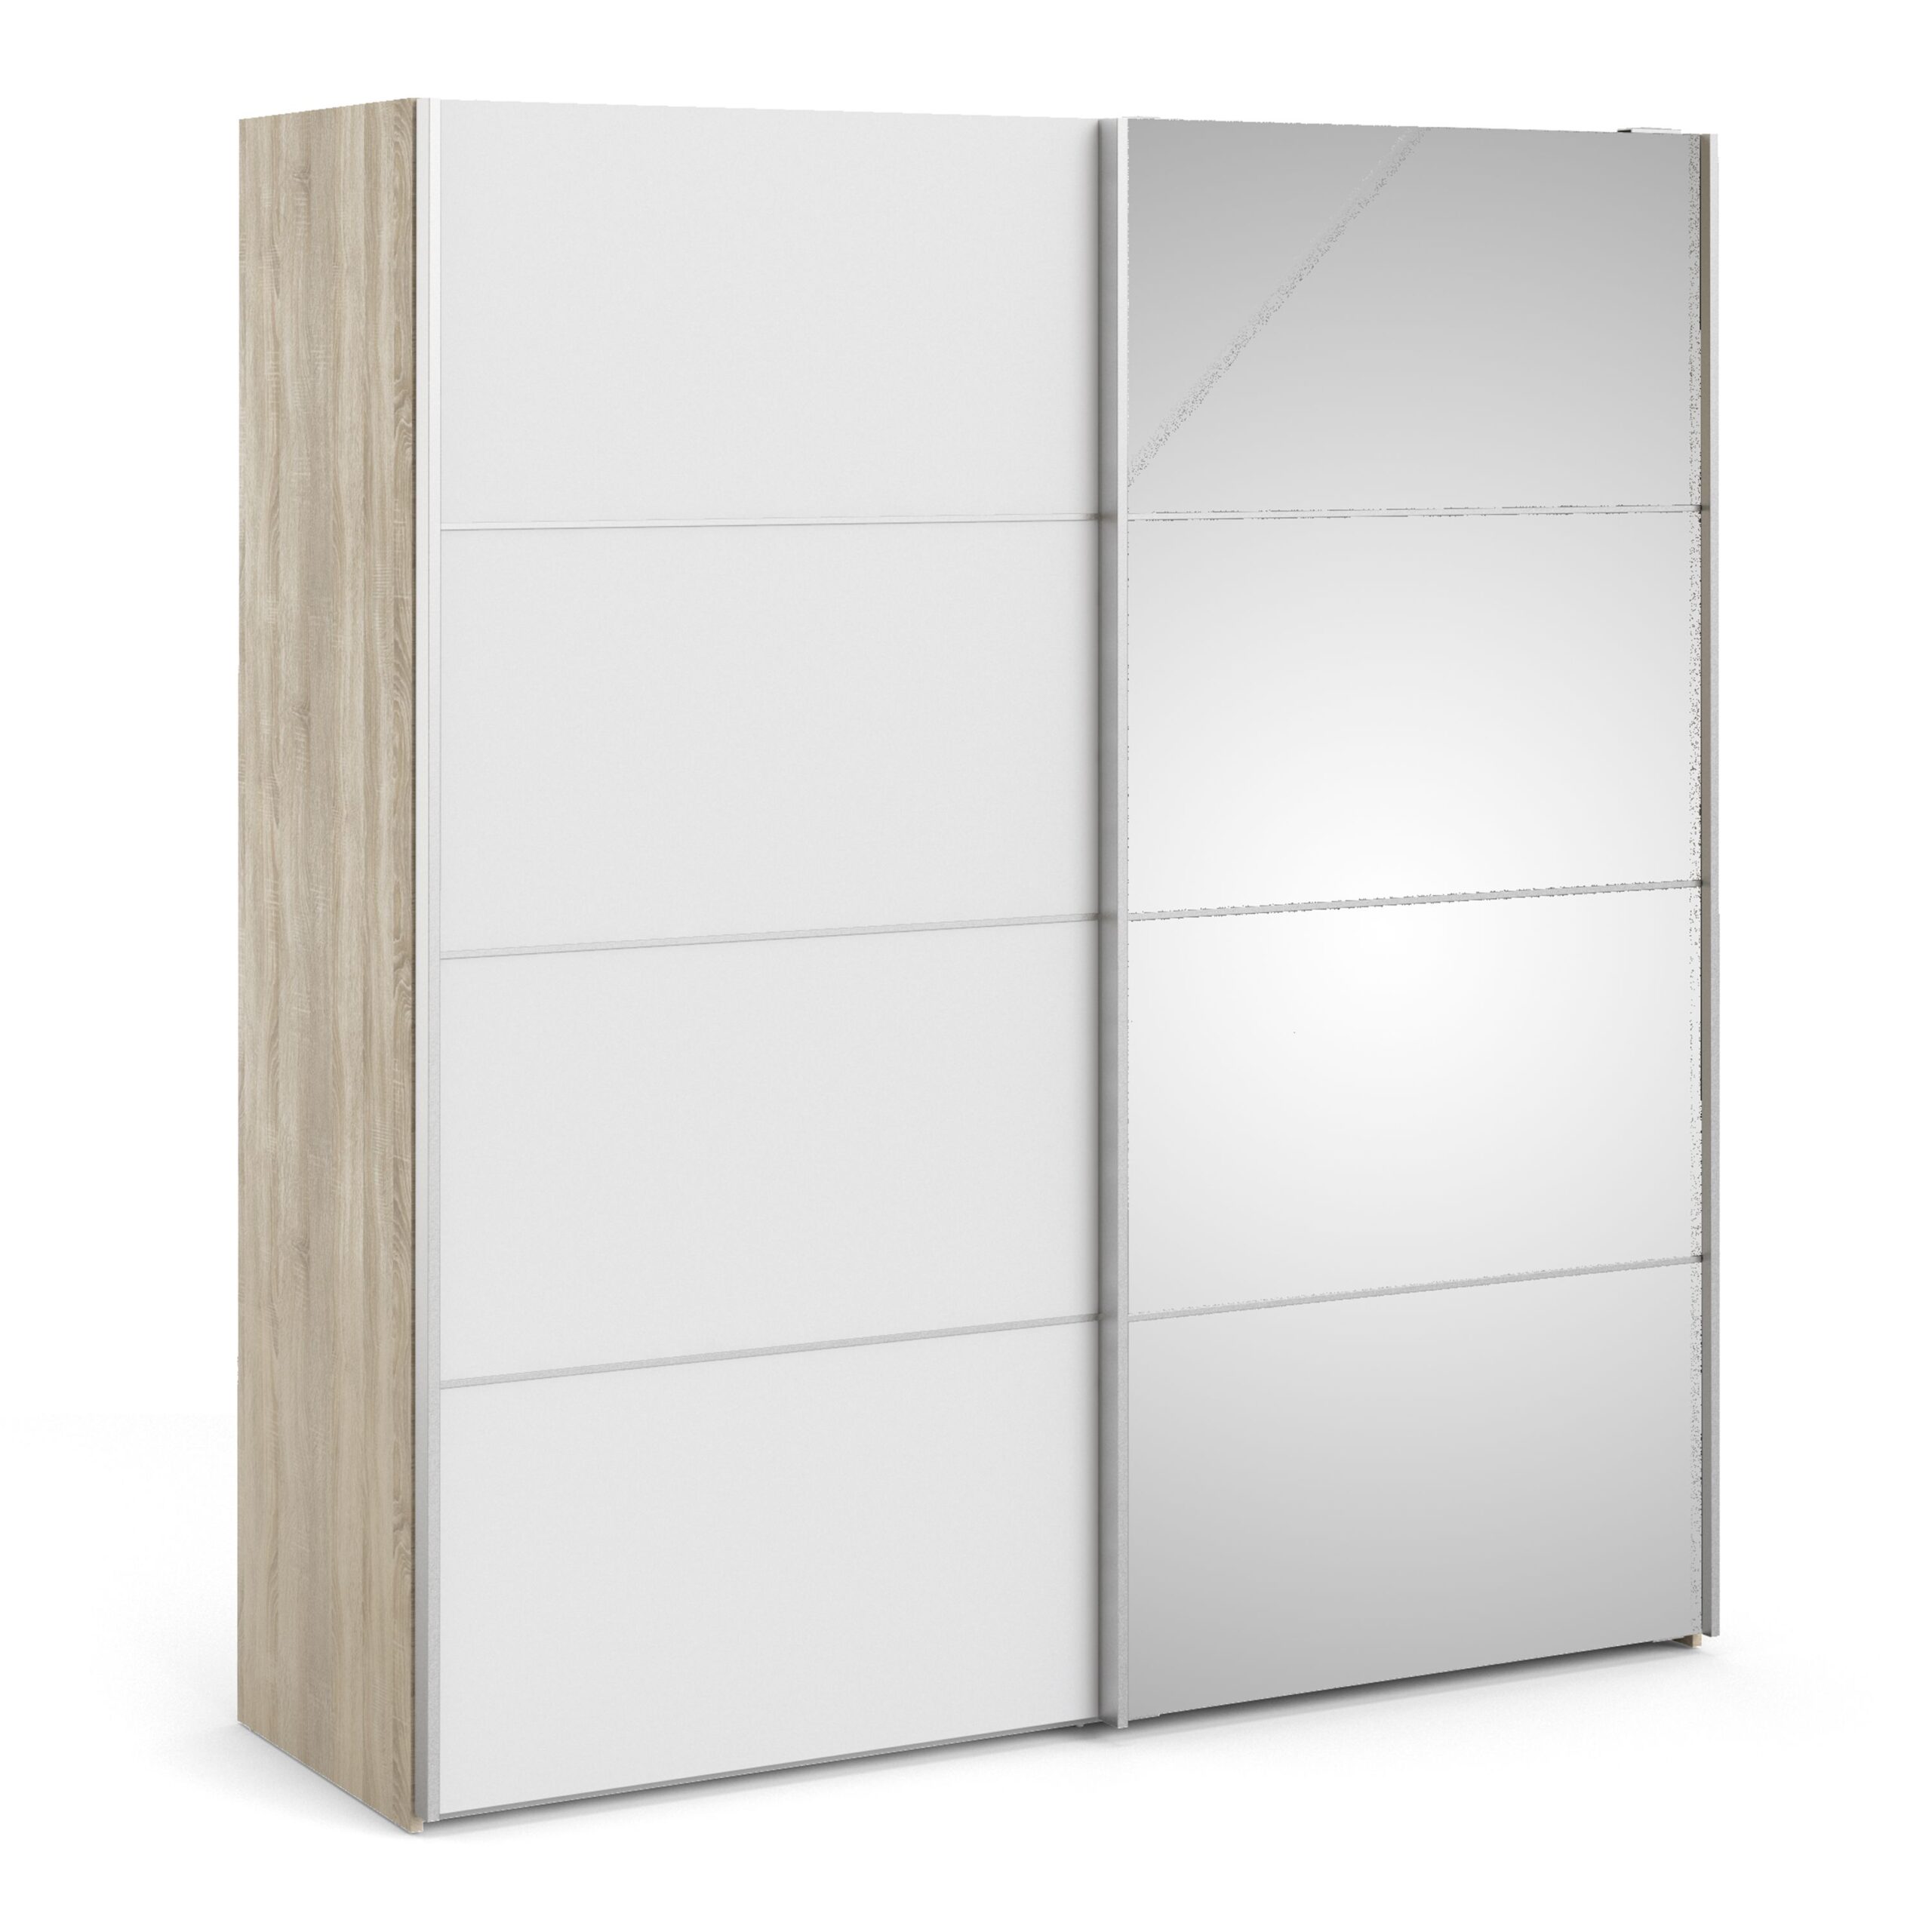 Phillipe Wardrobe Oak White Mirror Doors Two Shelves